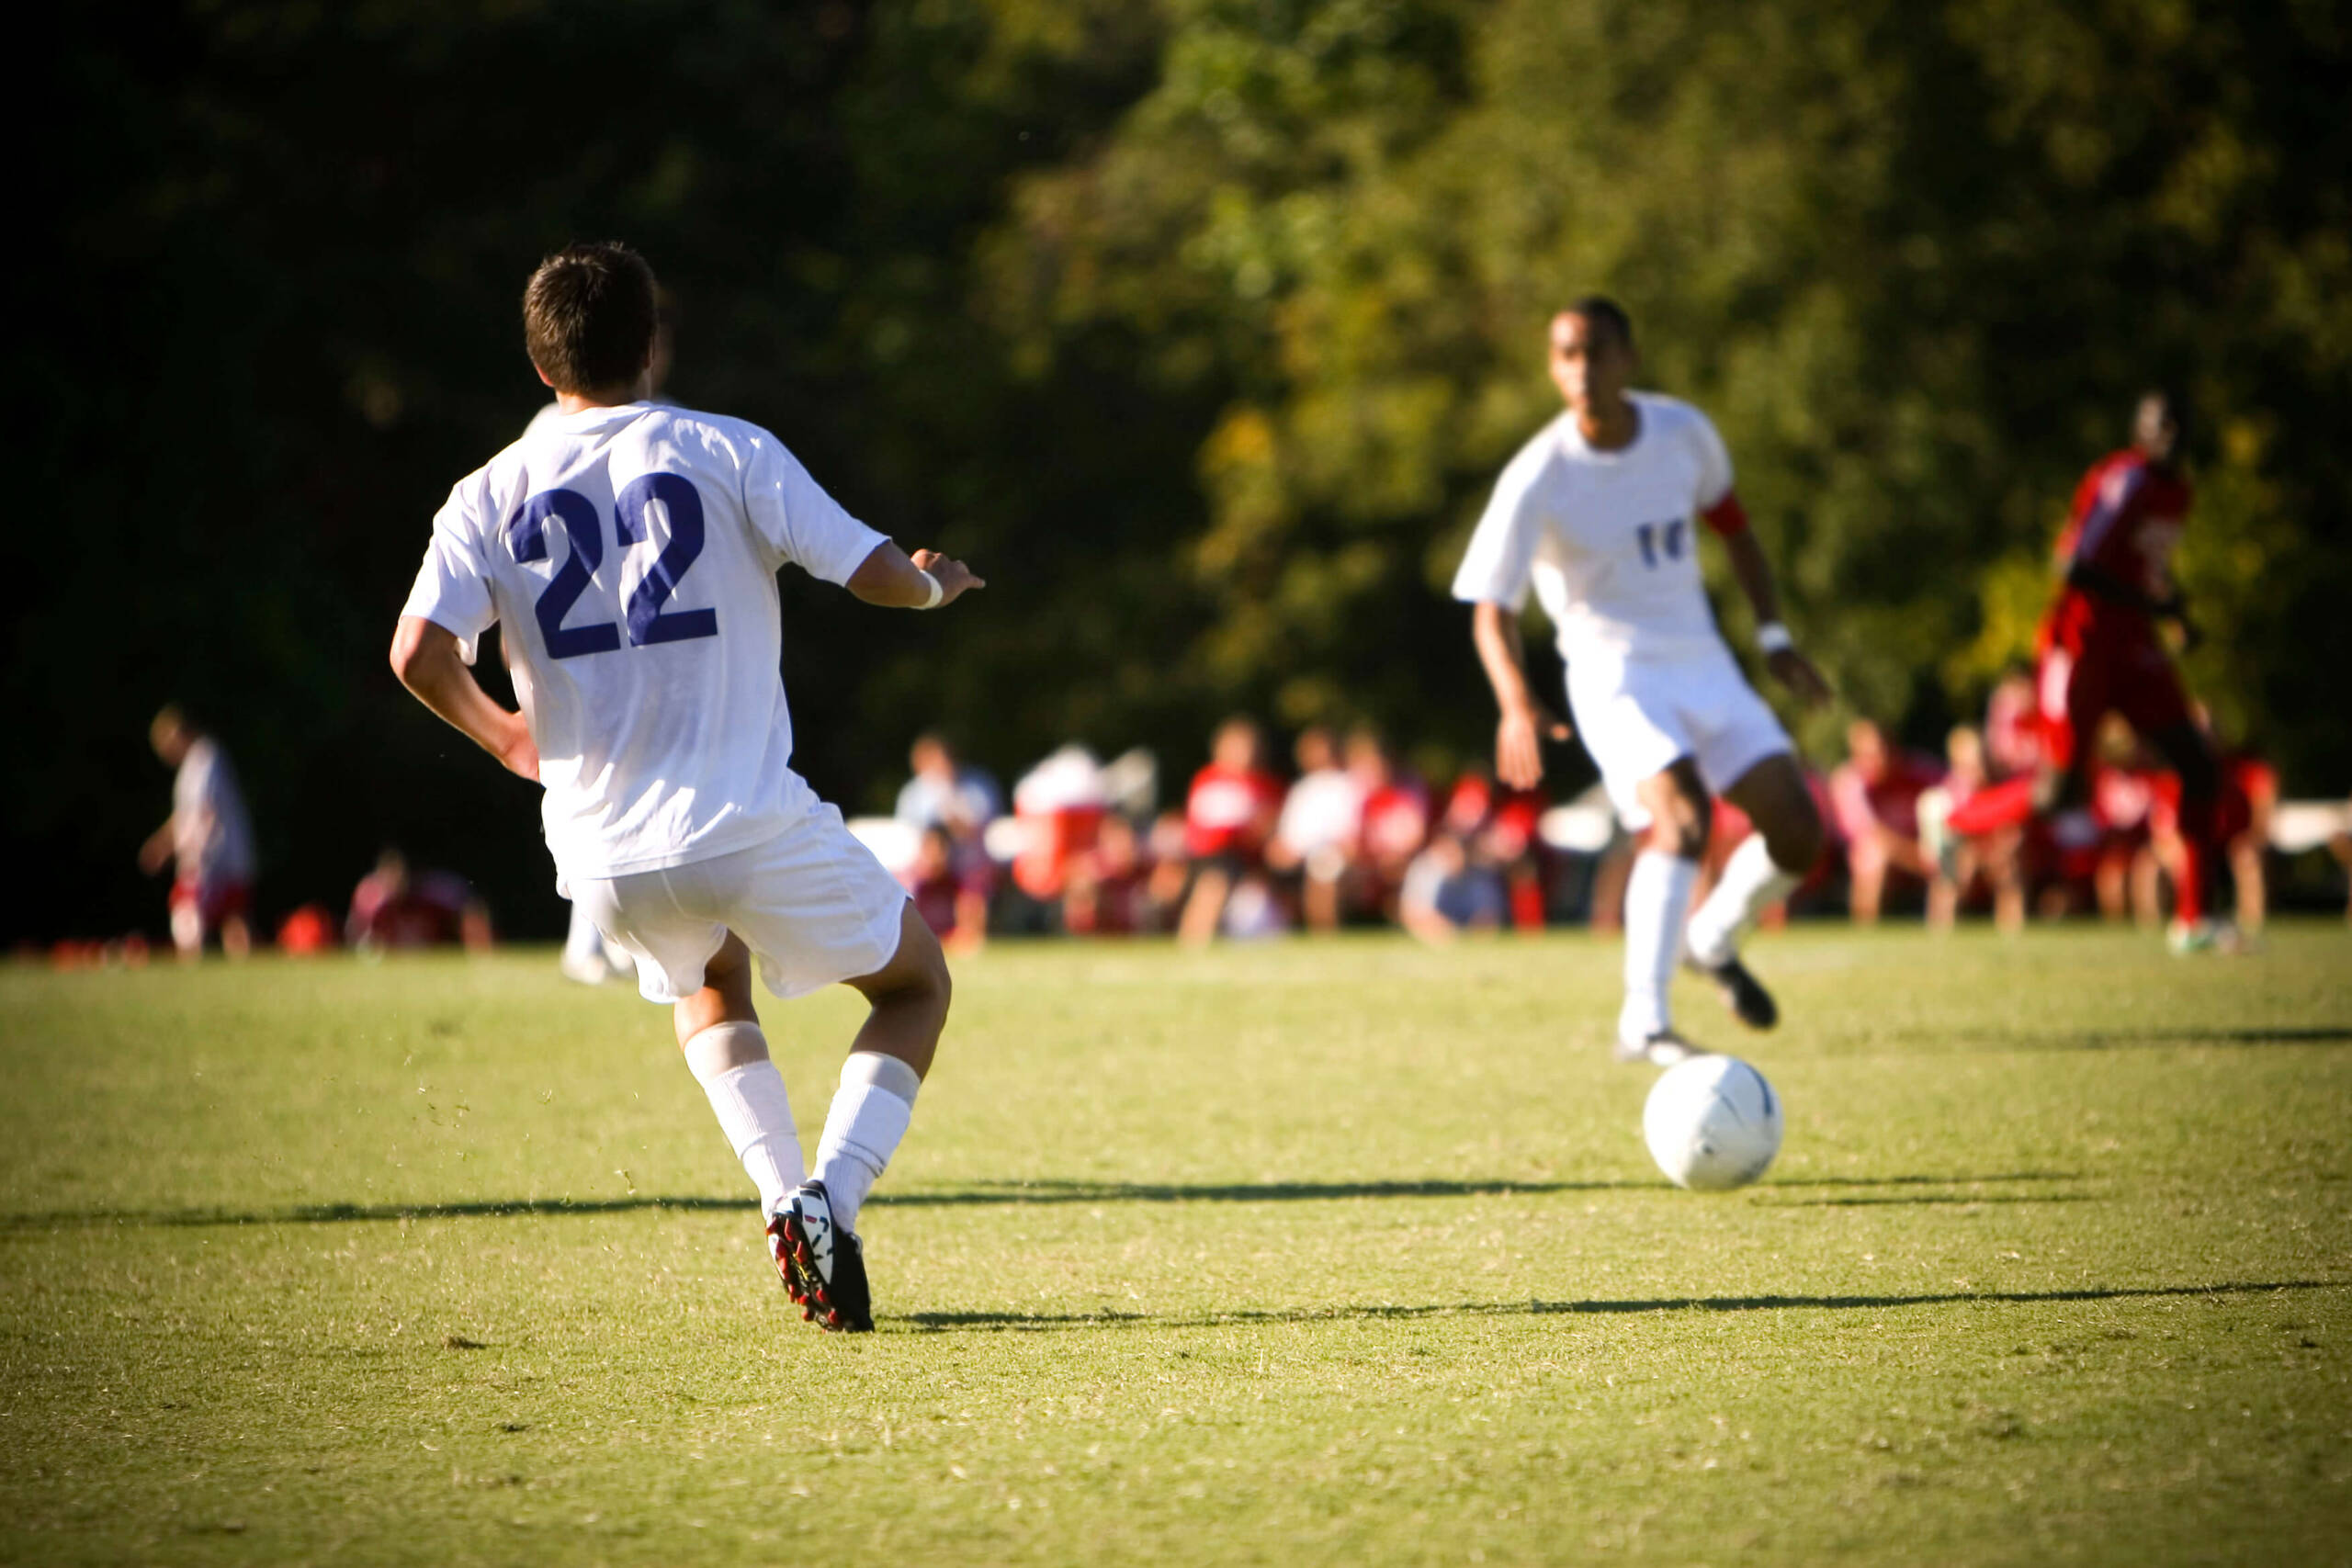 A soccer player is kicking a soccer ball.